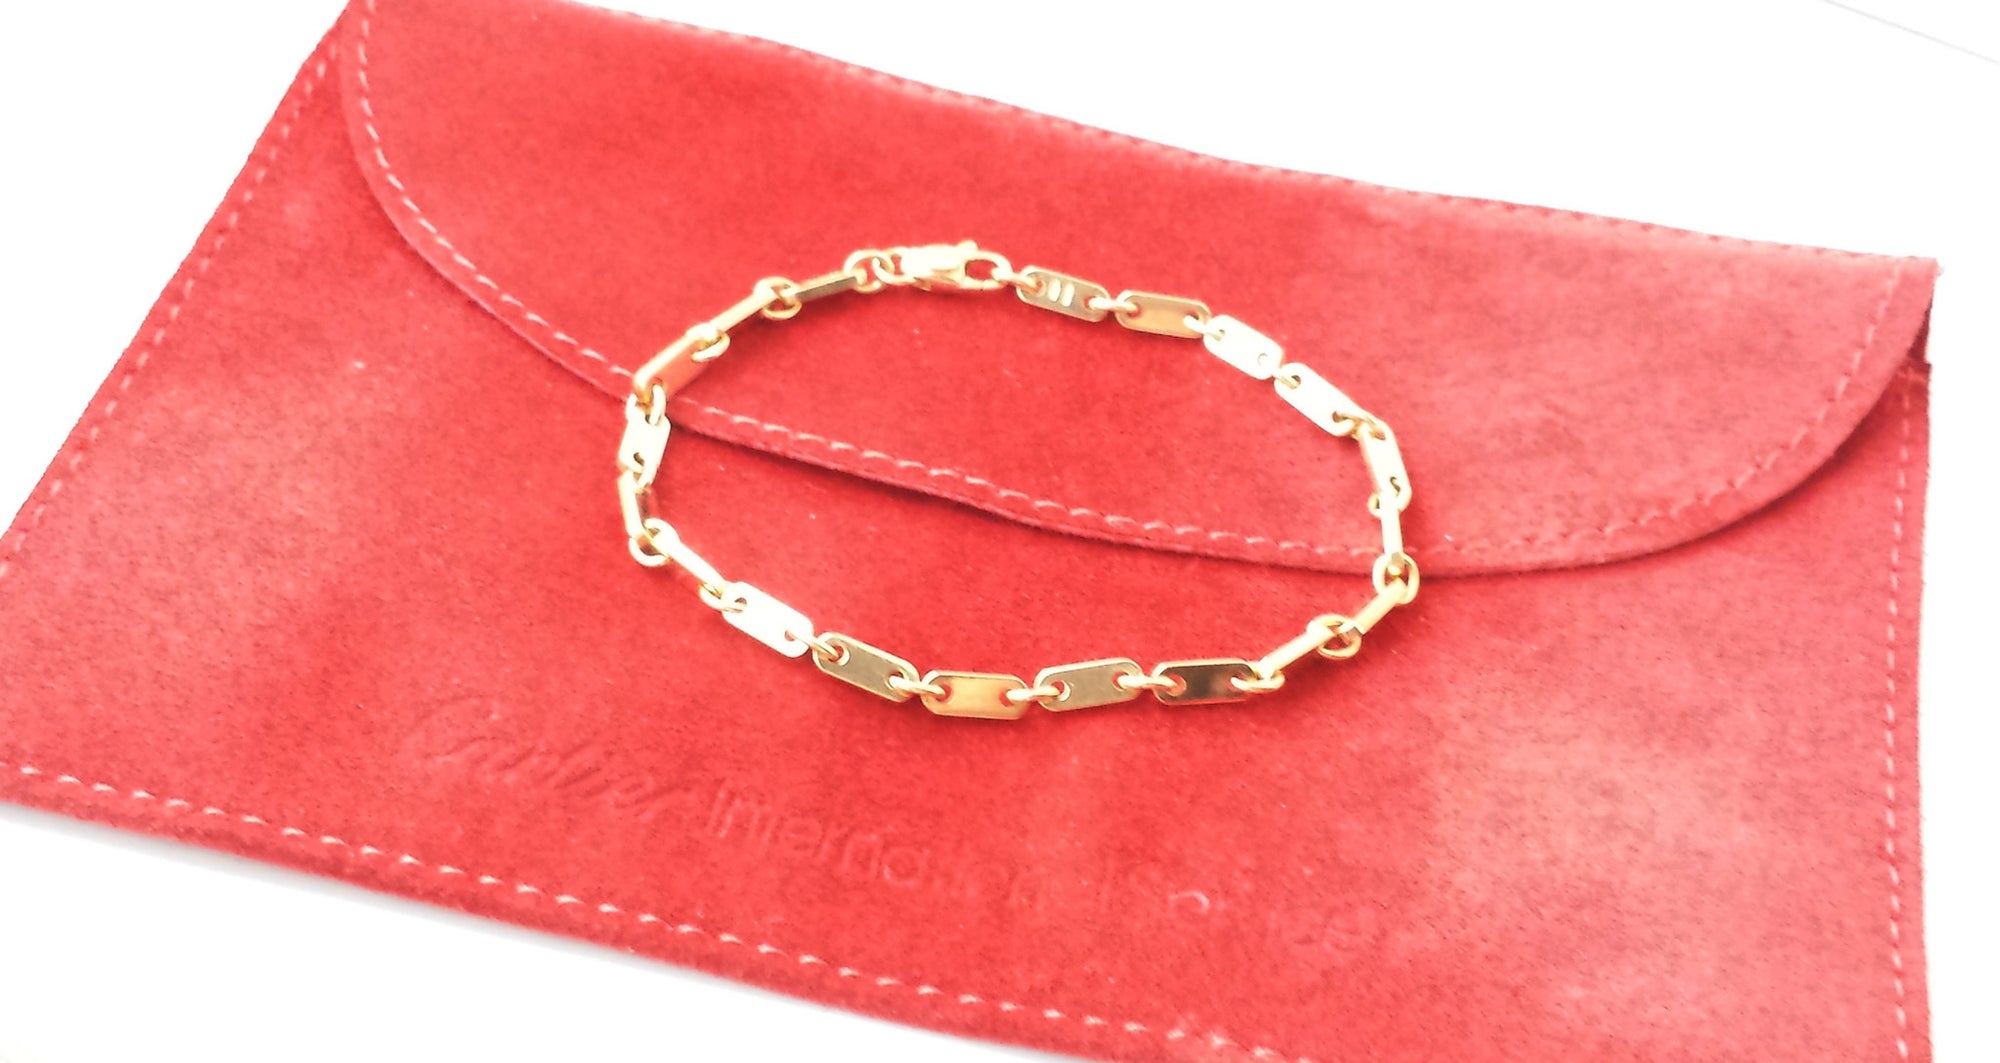 Vintage 1990s Cartier 18k Yellow Gold Link Bracelet